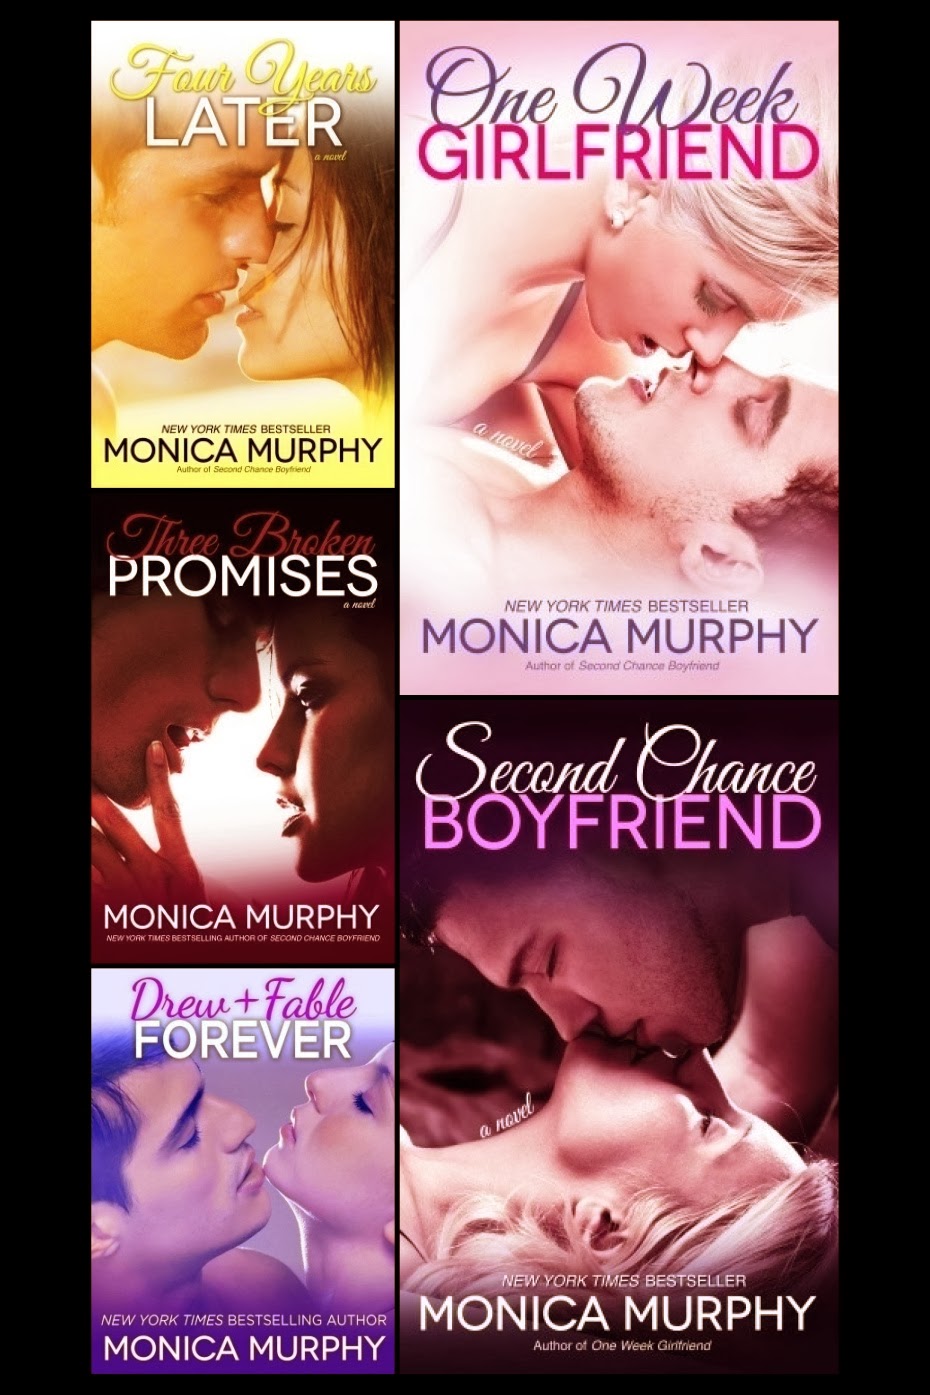 One Week Girlfriend Series by Monica Murphy